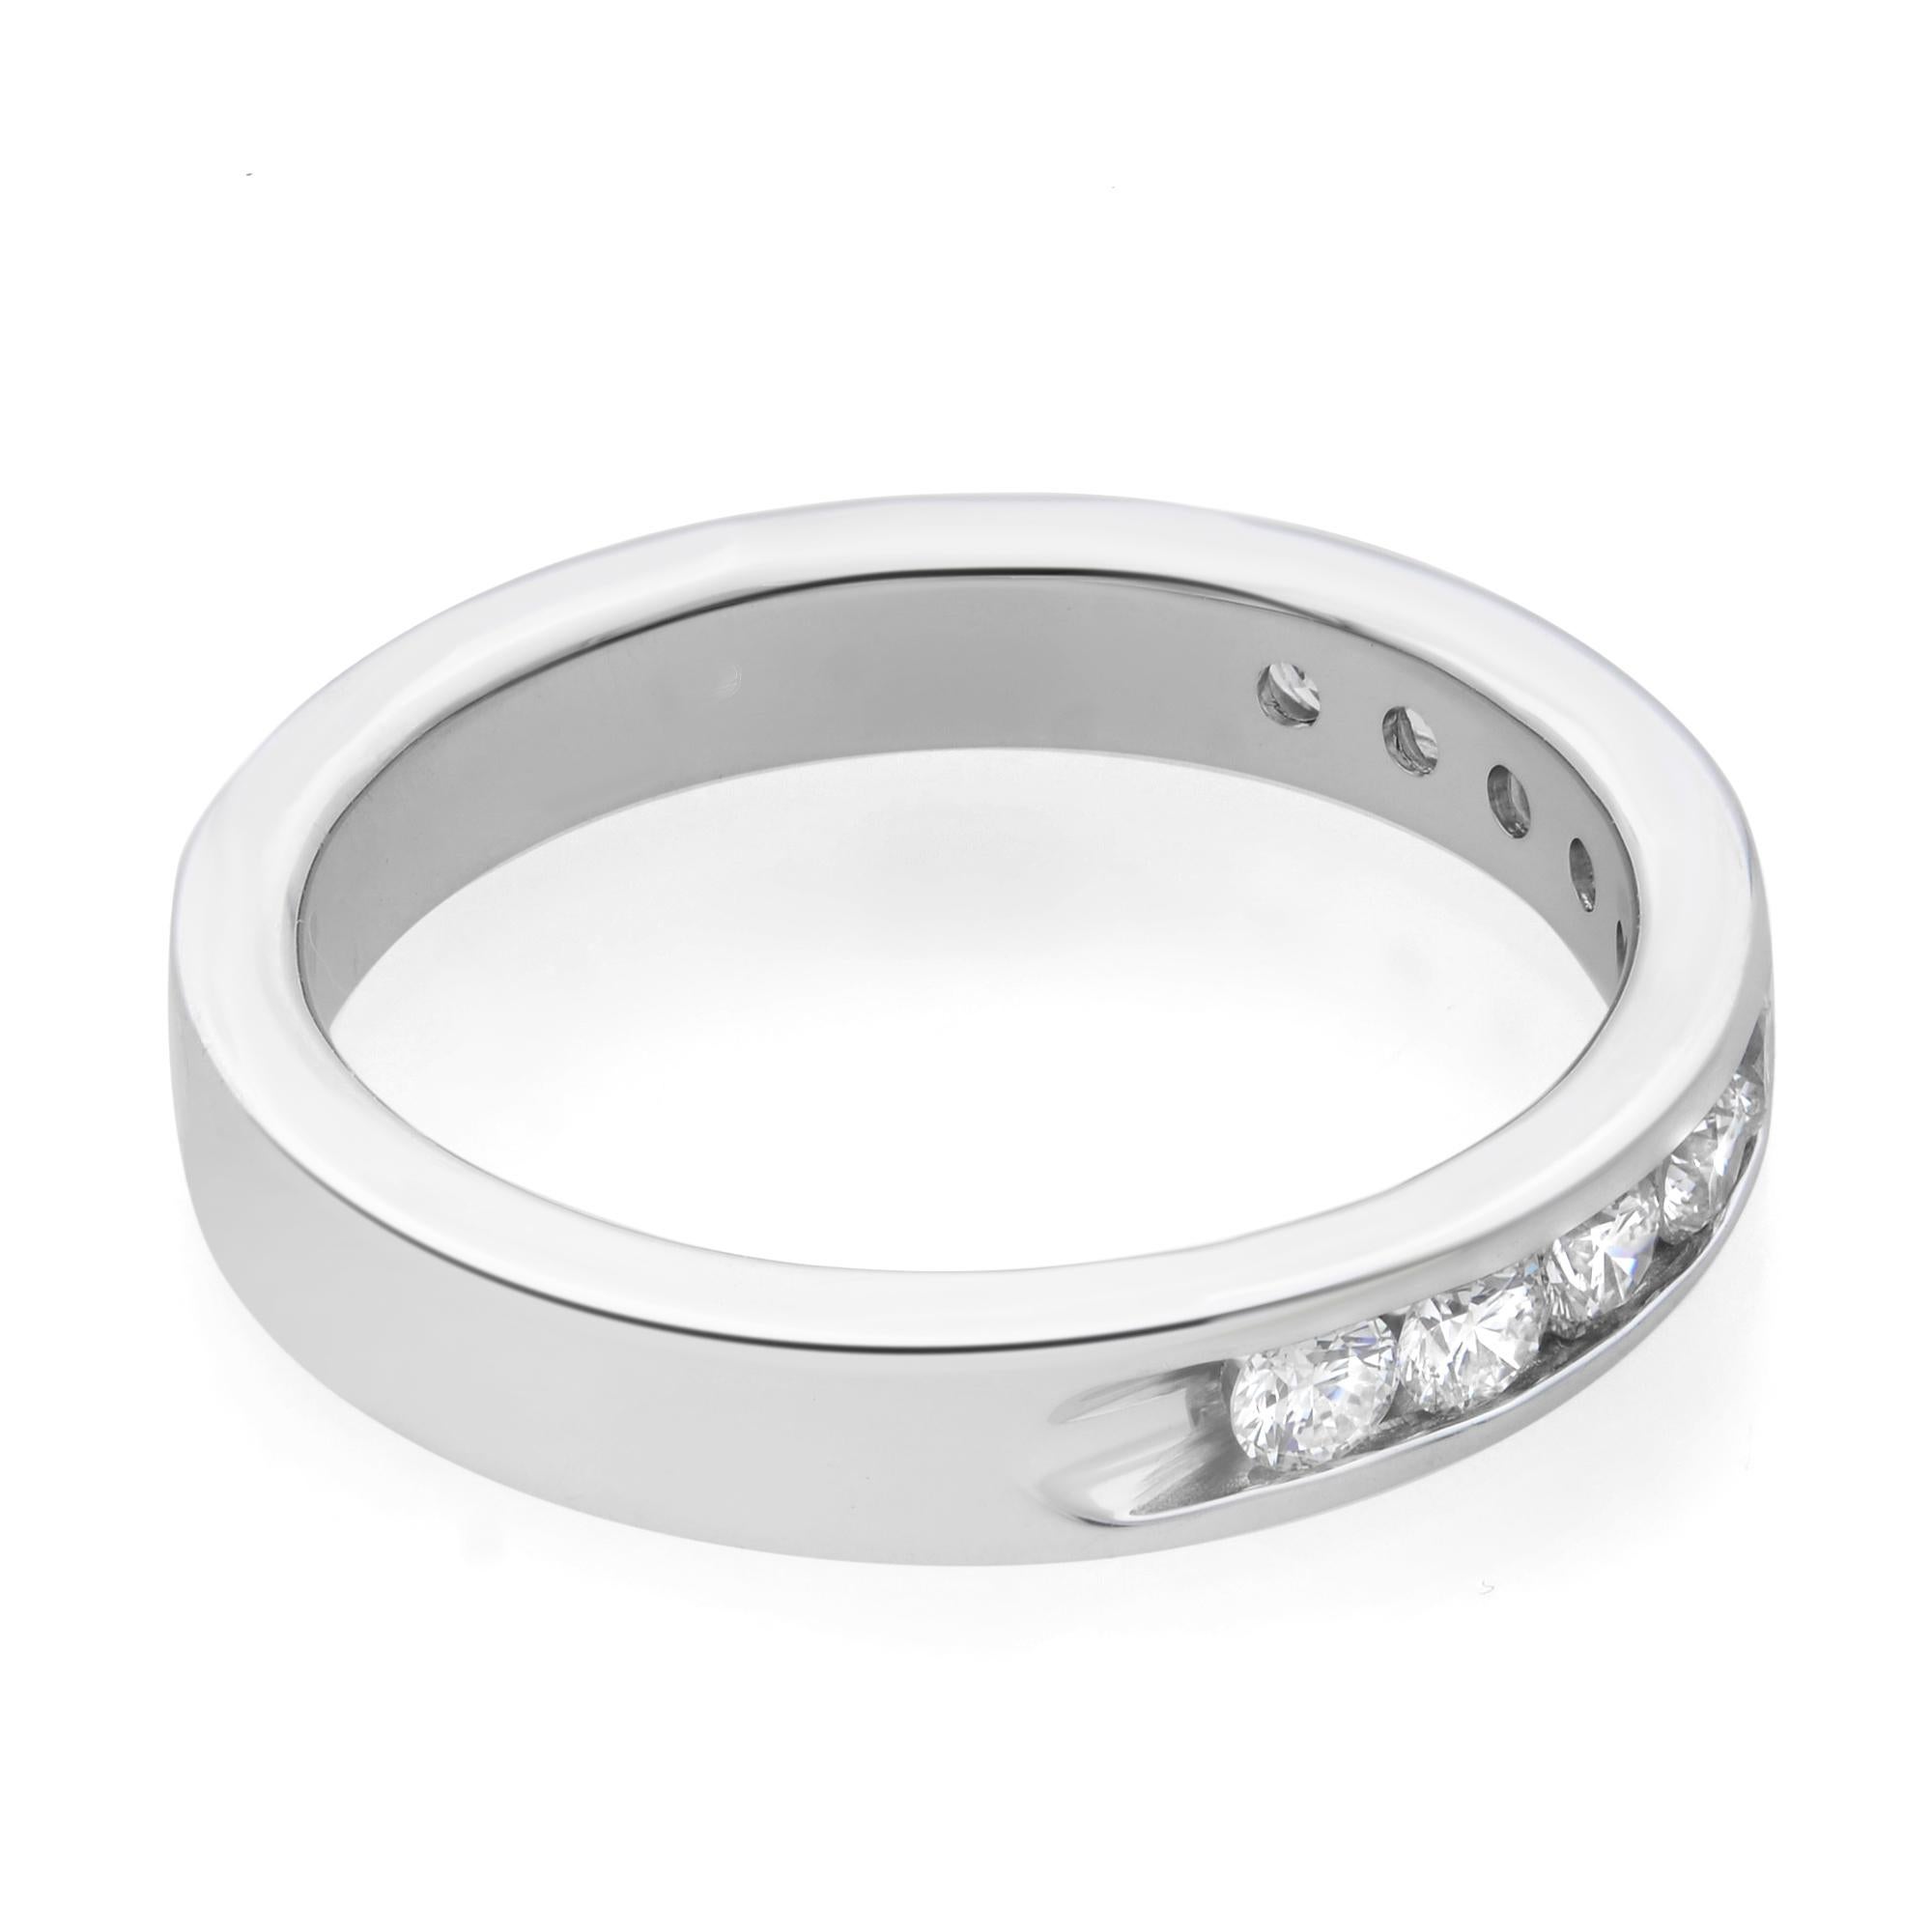 Round Cut Rachel Koen Channel Set Diamond Wedding Band Ring 14k White Gold 0.50cttw For Sale